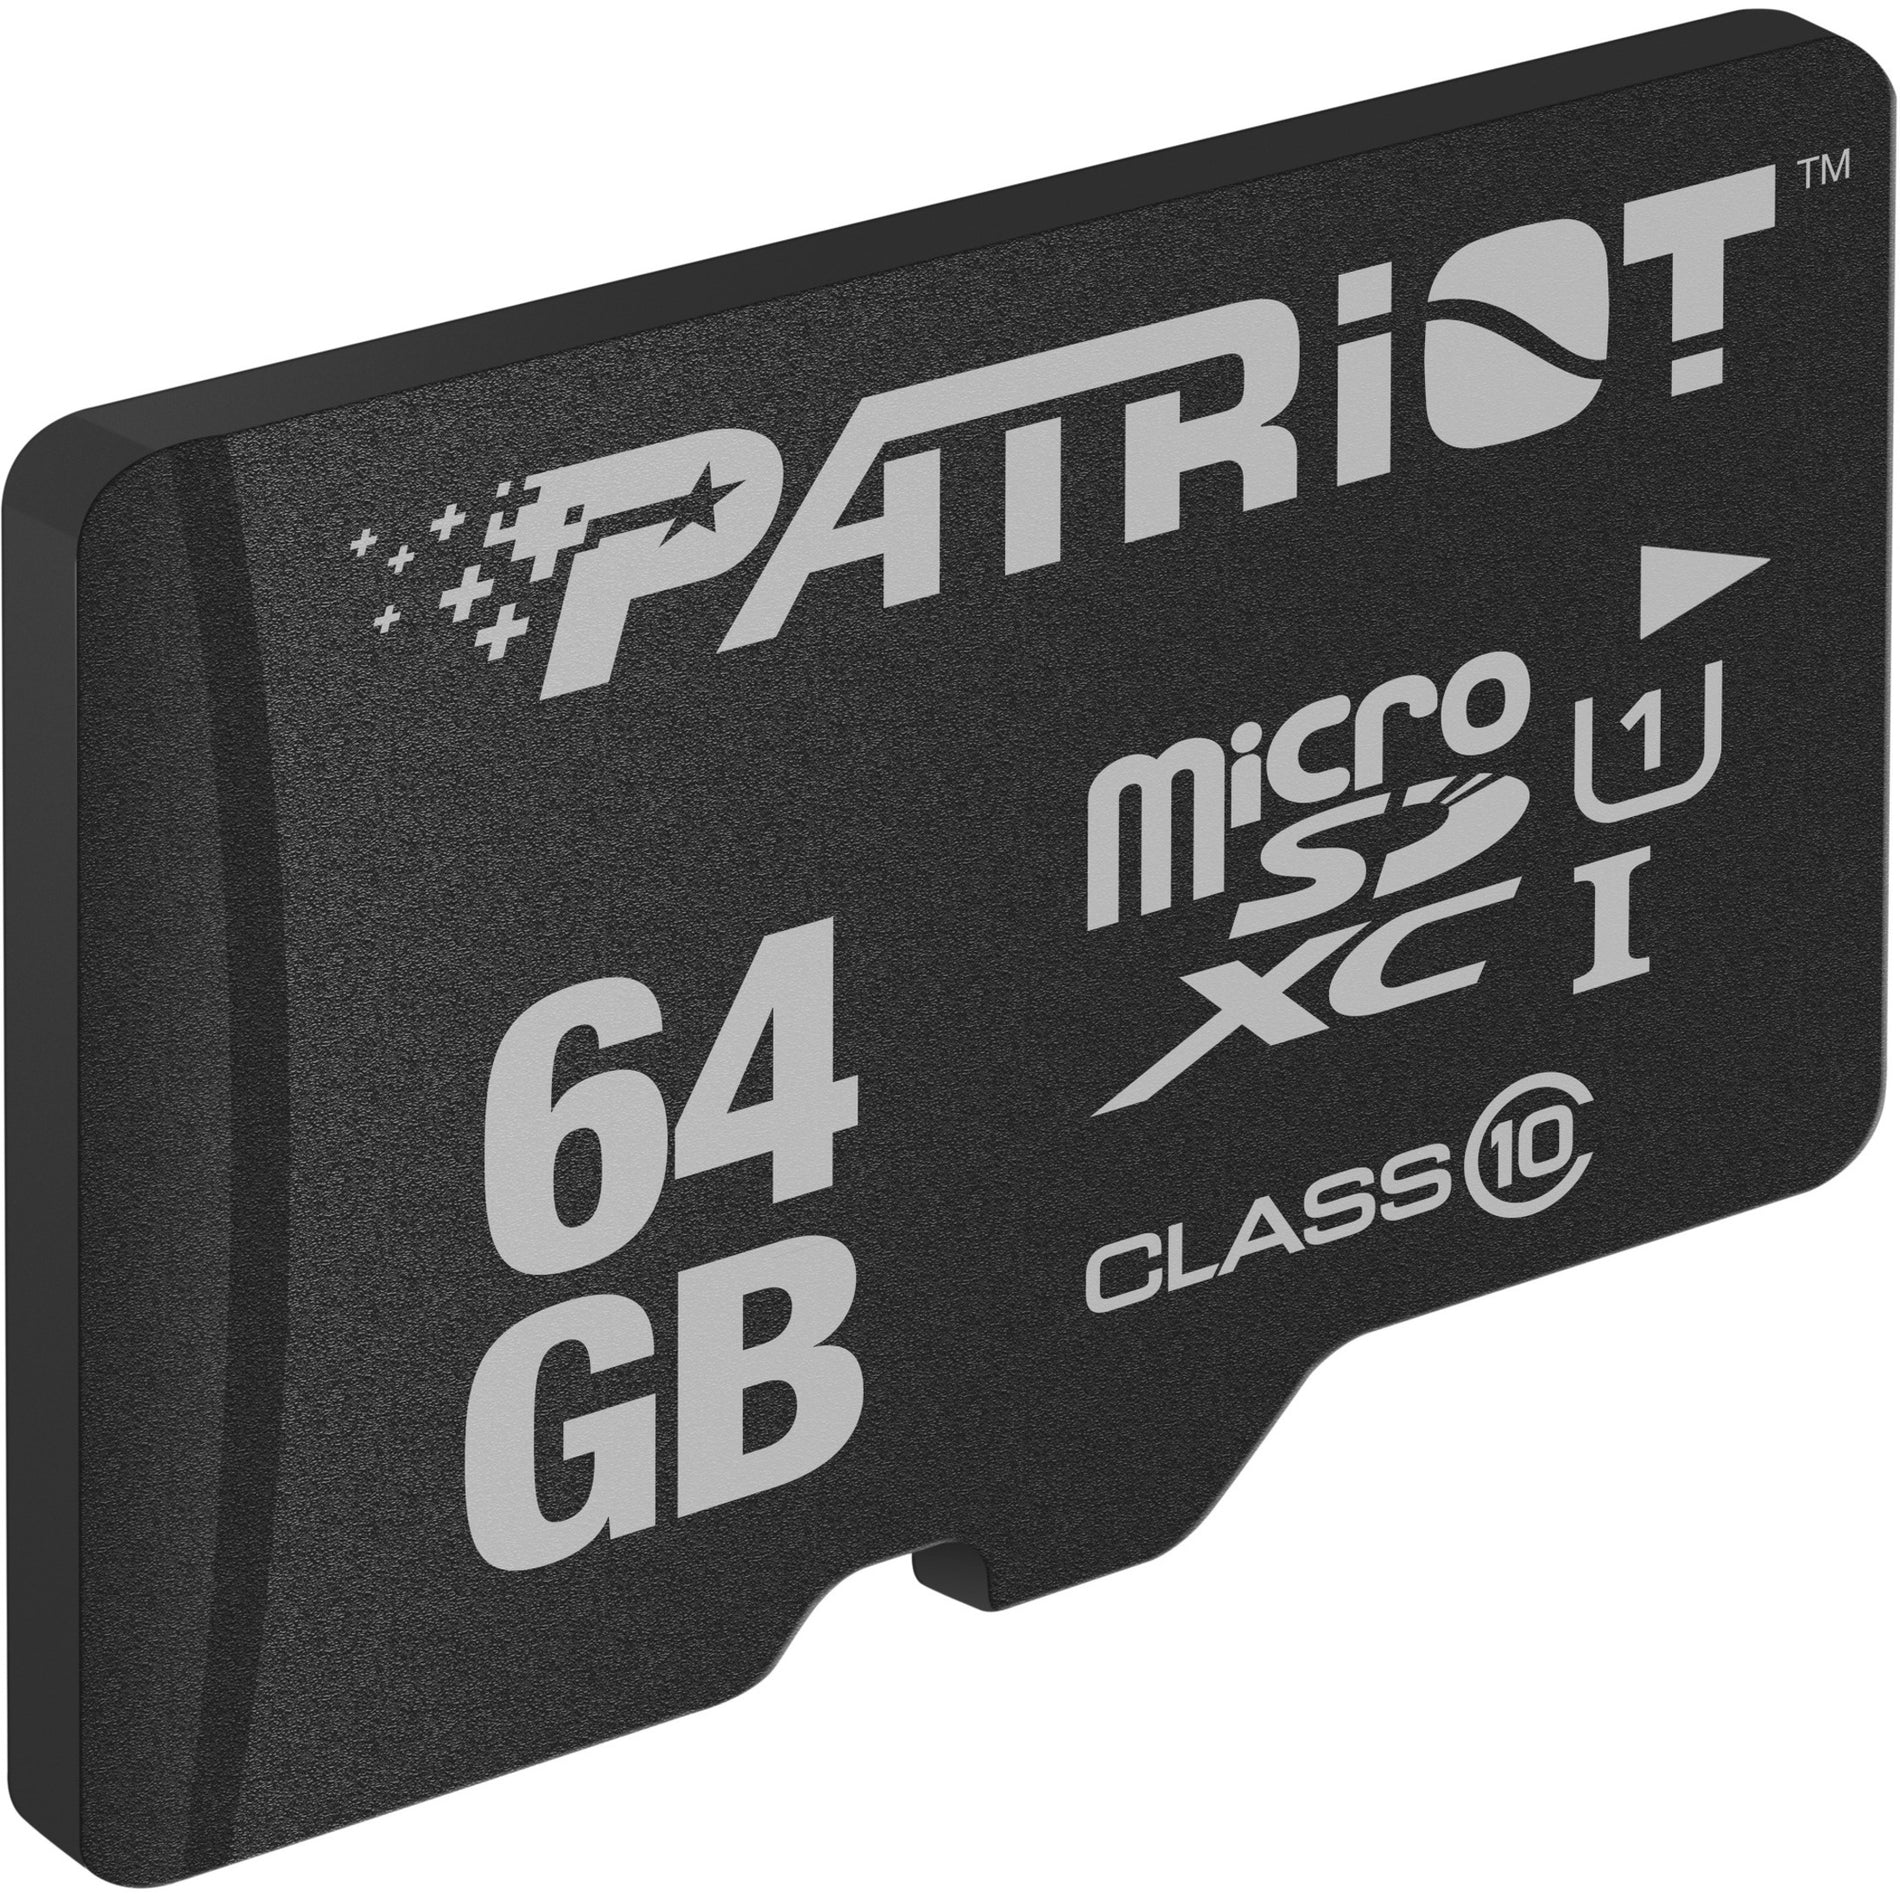 Patriot Memory PSF64GMDC10 LX 64GB microSDXC Card, 2 Year Limited Warranty, Class 10/UHS-I (U1), 80 MB/s Read Speed